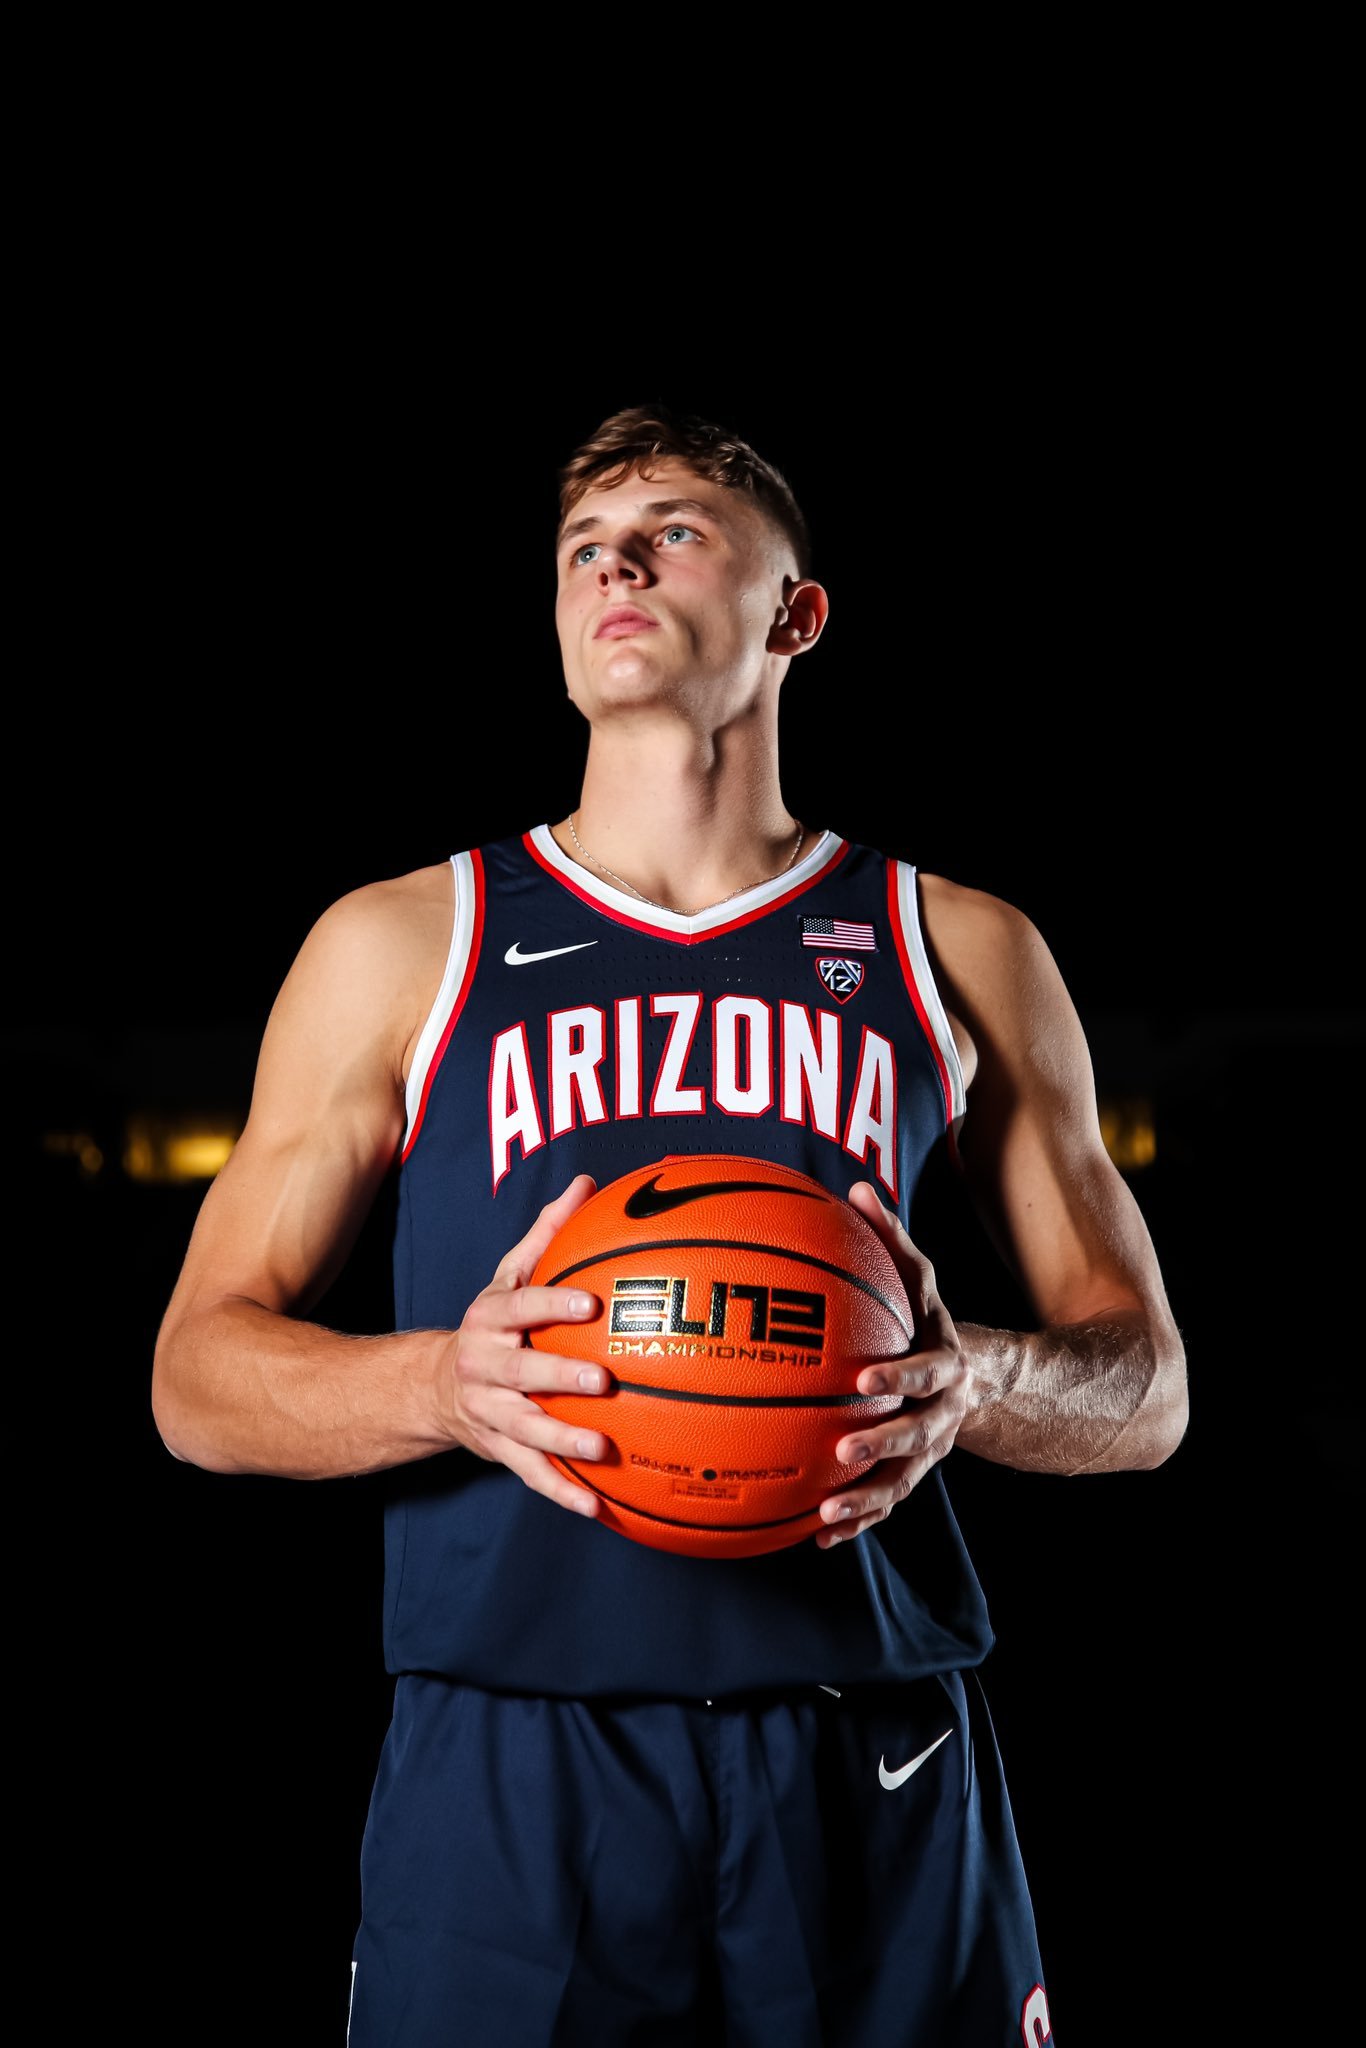 Arizona basketball unveils Lute Olson jersey patch for 2020-21 season -  Arizona Desert Swarm